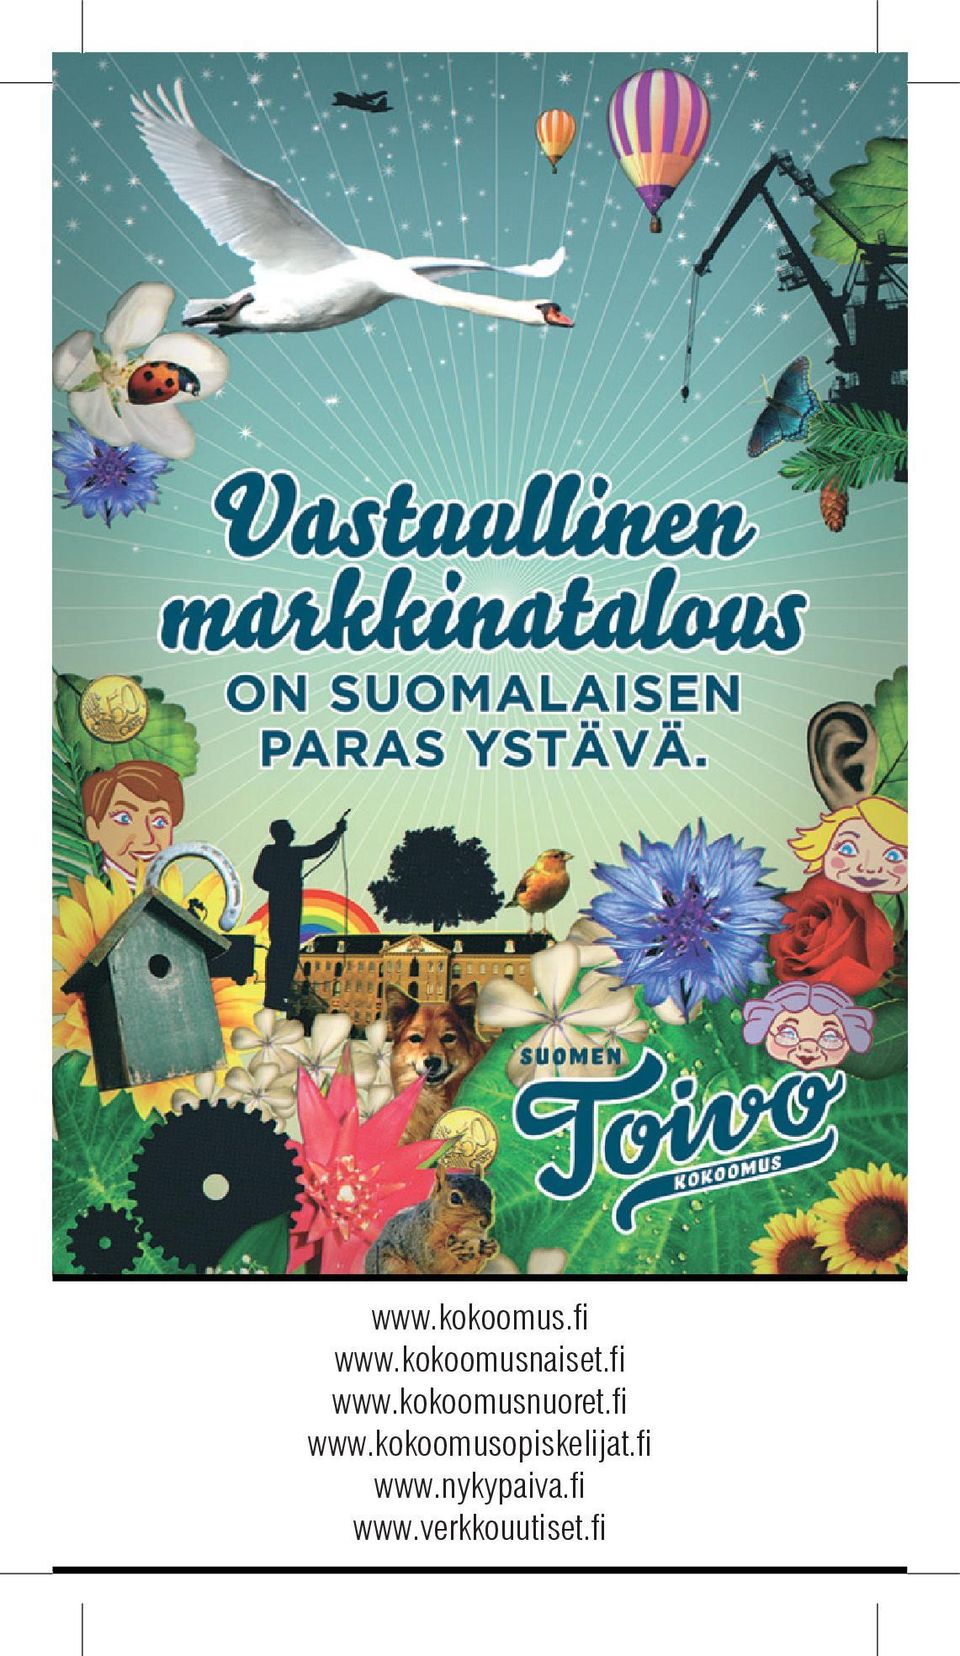 kokoomusnuoret.fi www.